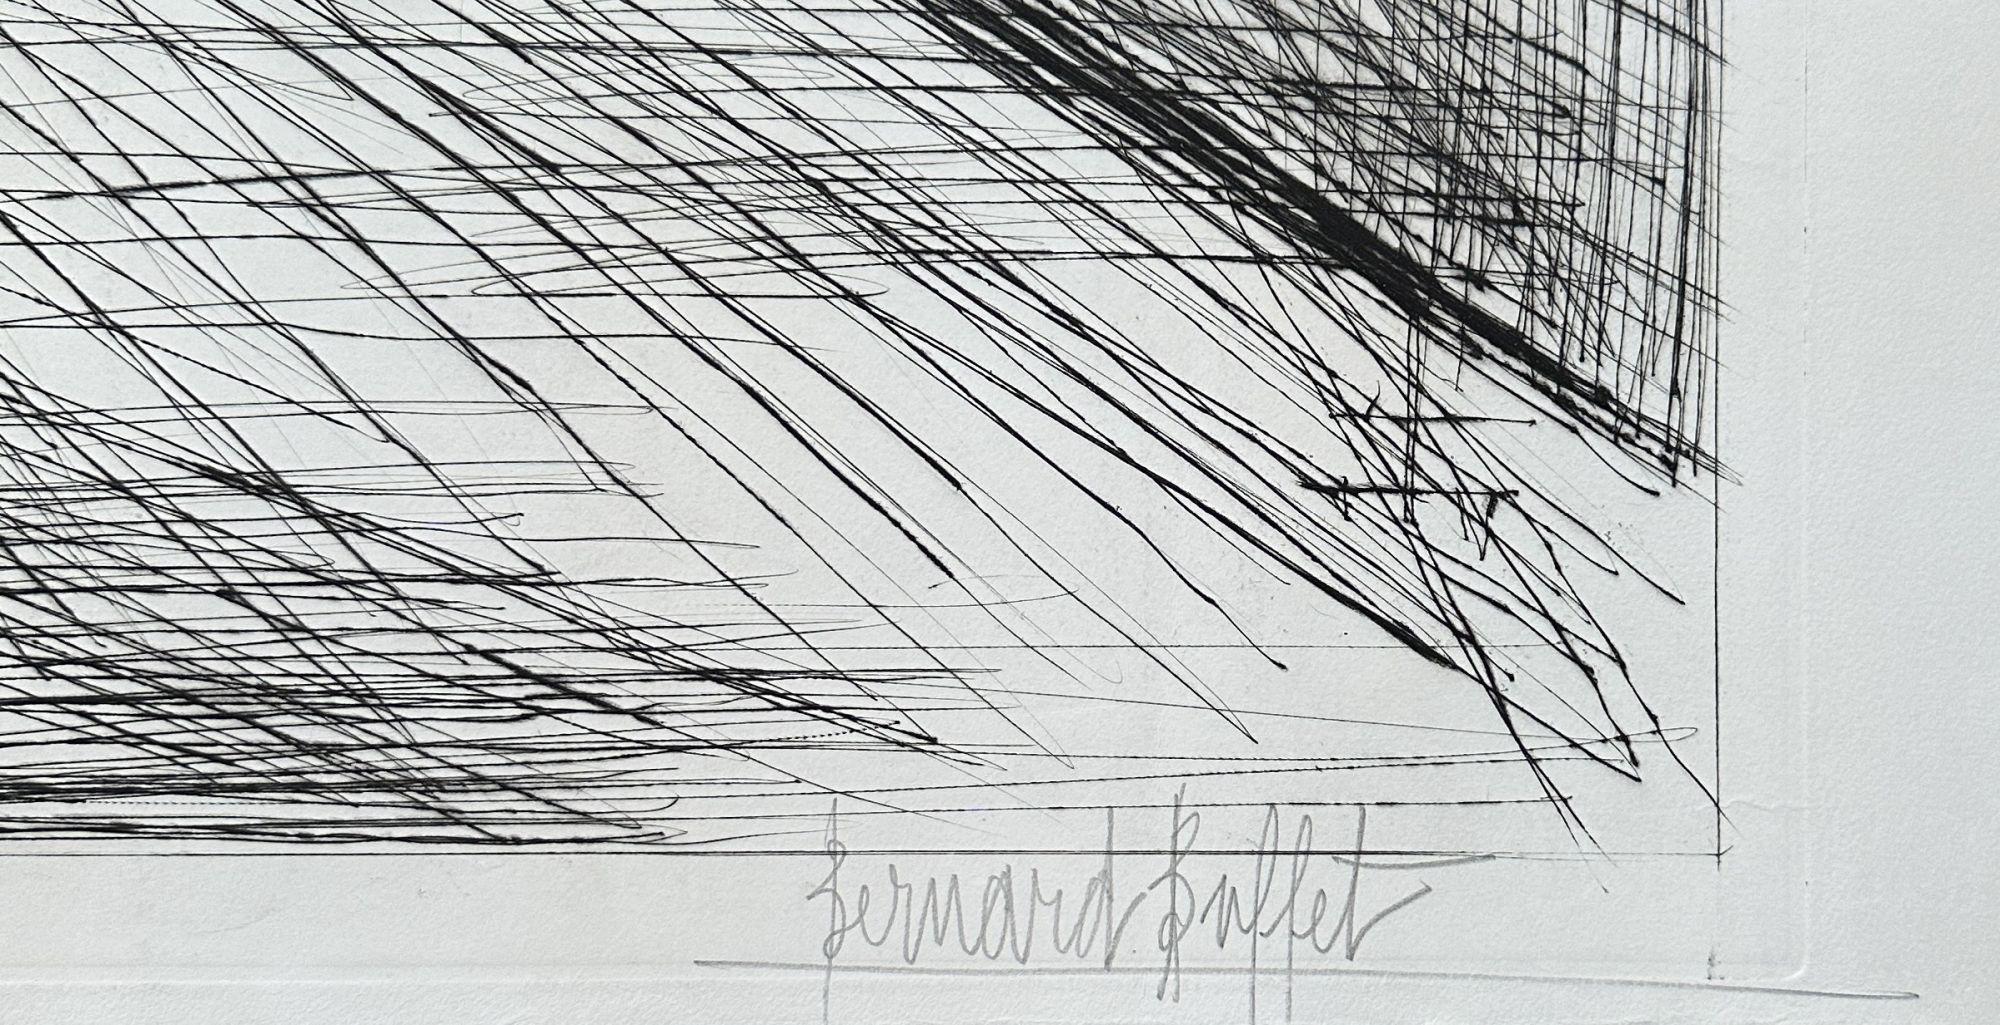 Bernard Buffet
The Canal, 1955

Original etching
Hand signed in pencil
Numbered /125 copies
On BFK Rives vellum size 56 x 76.5 cm (c. 22 x 30 in)
Very good condition

REFERENCES : Catalogue raisonné Bernard Buffet Graveur, référence Rheims #10